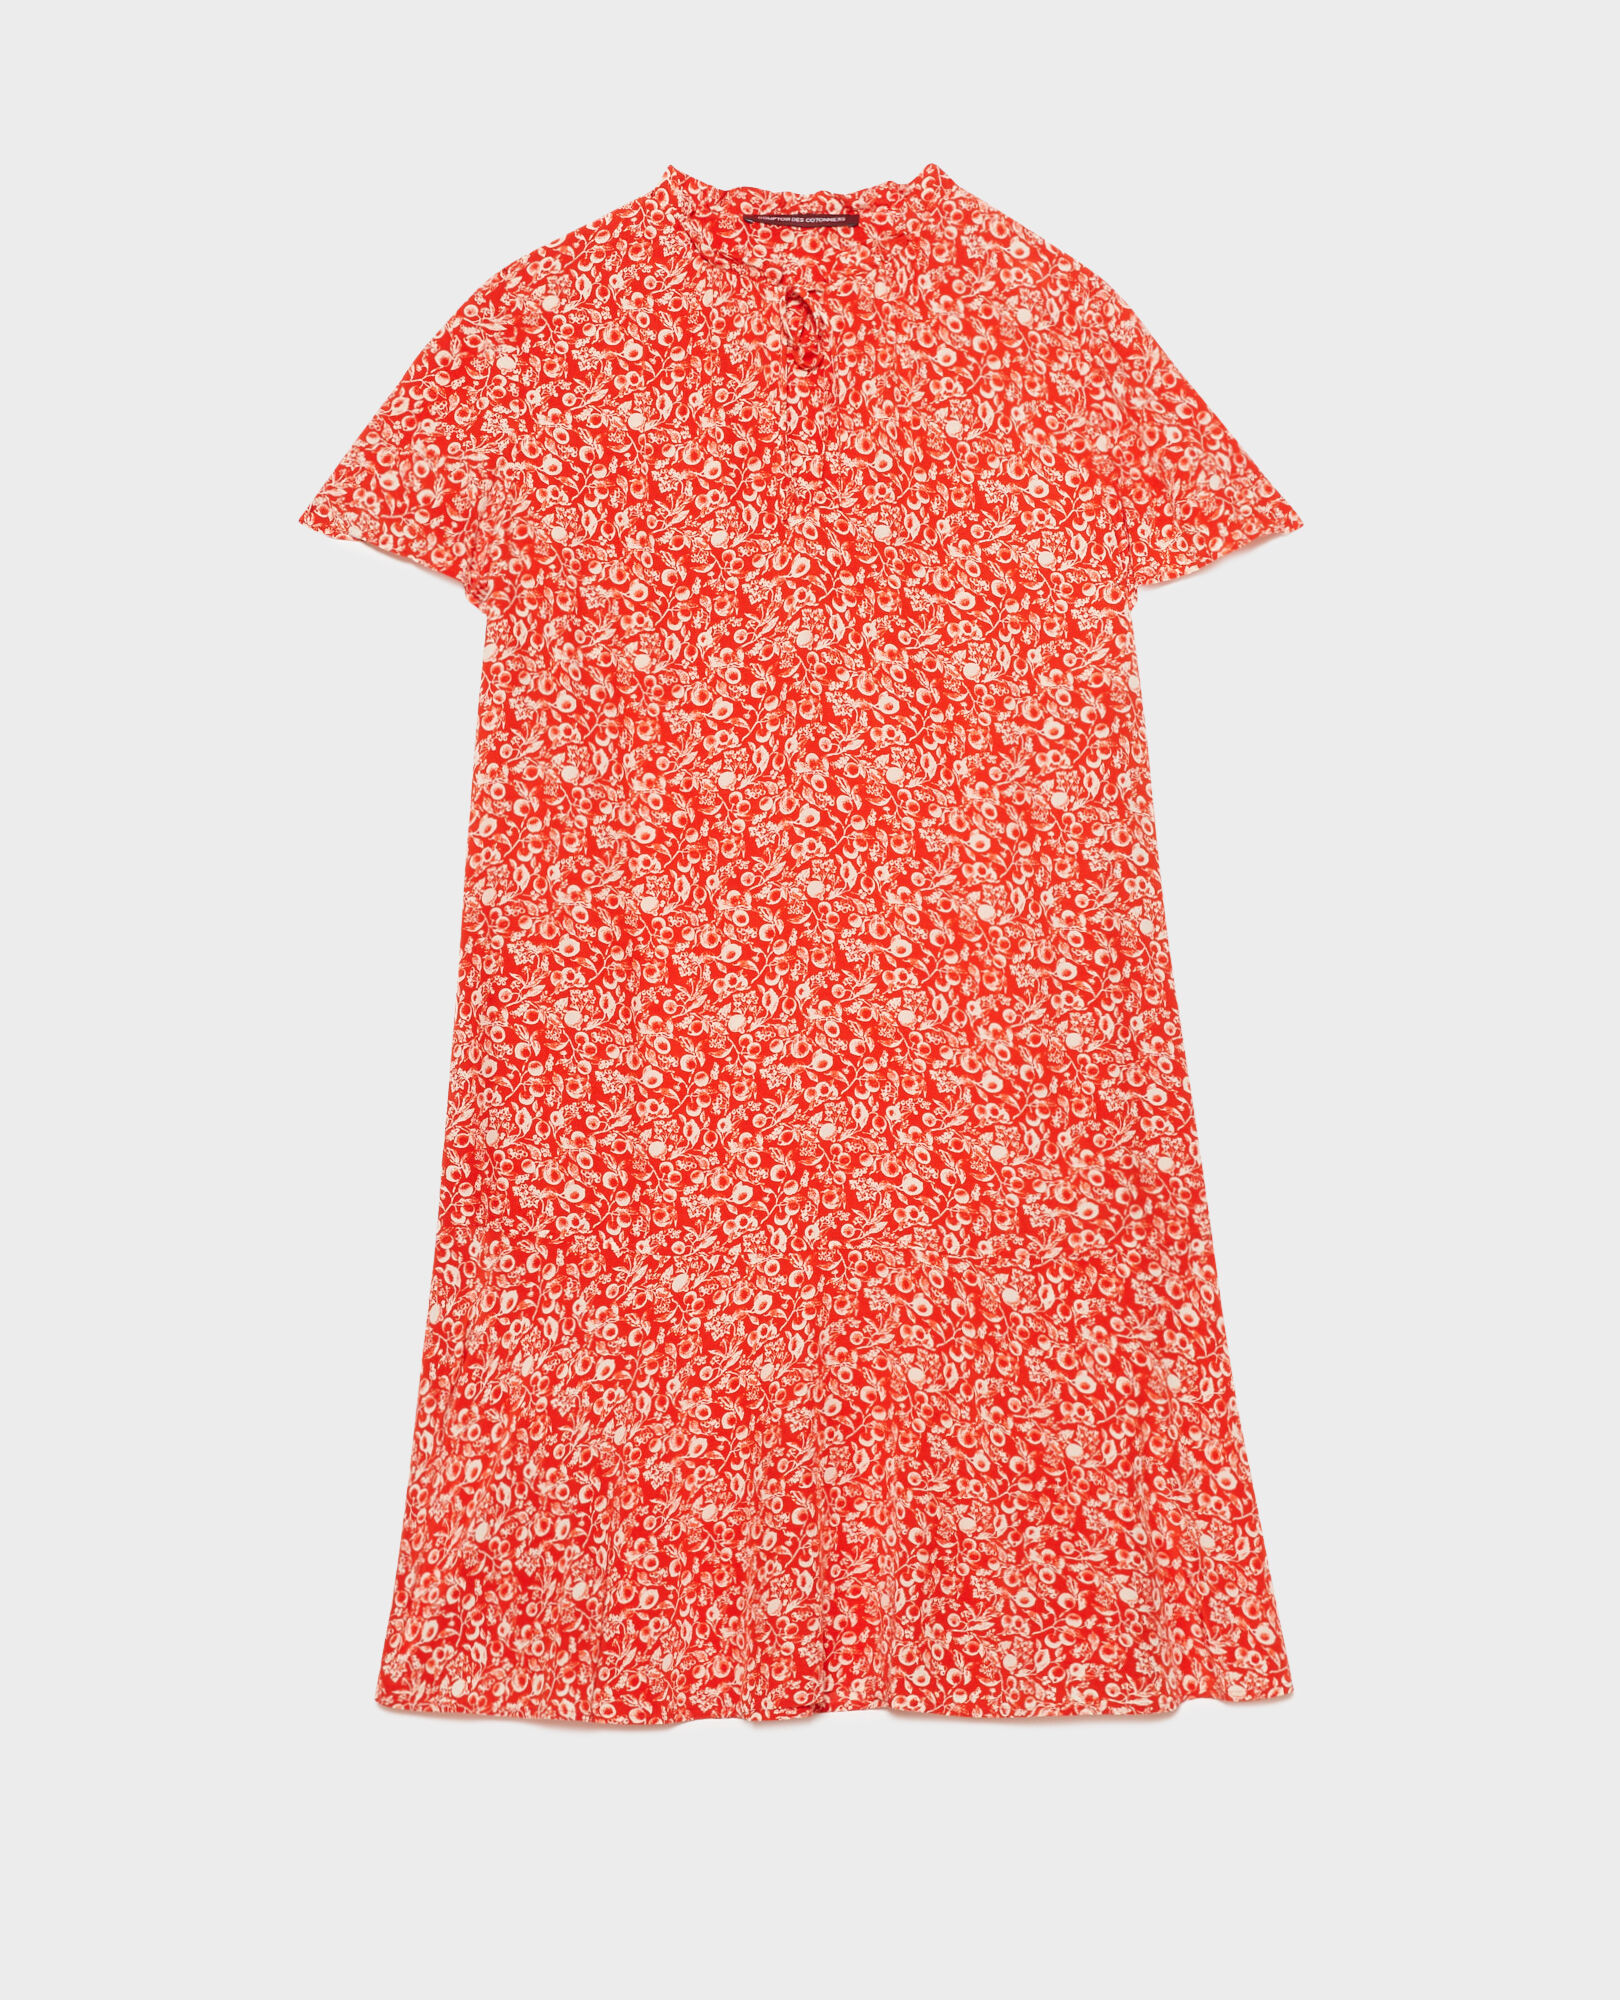 Mini dress 101 print red 2sdr255v02